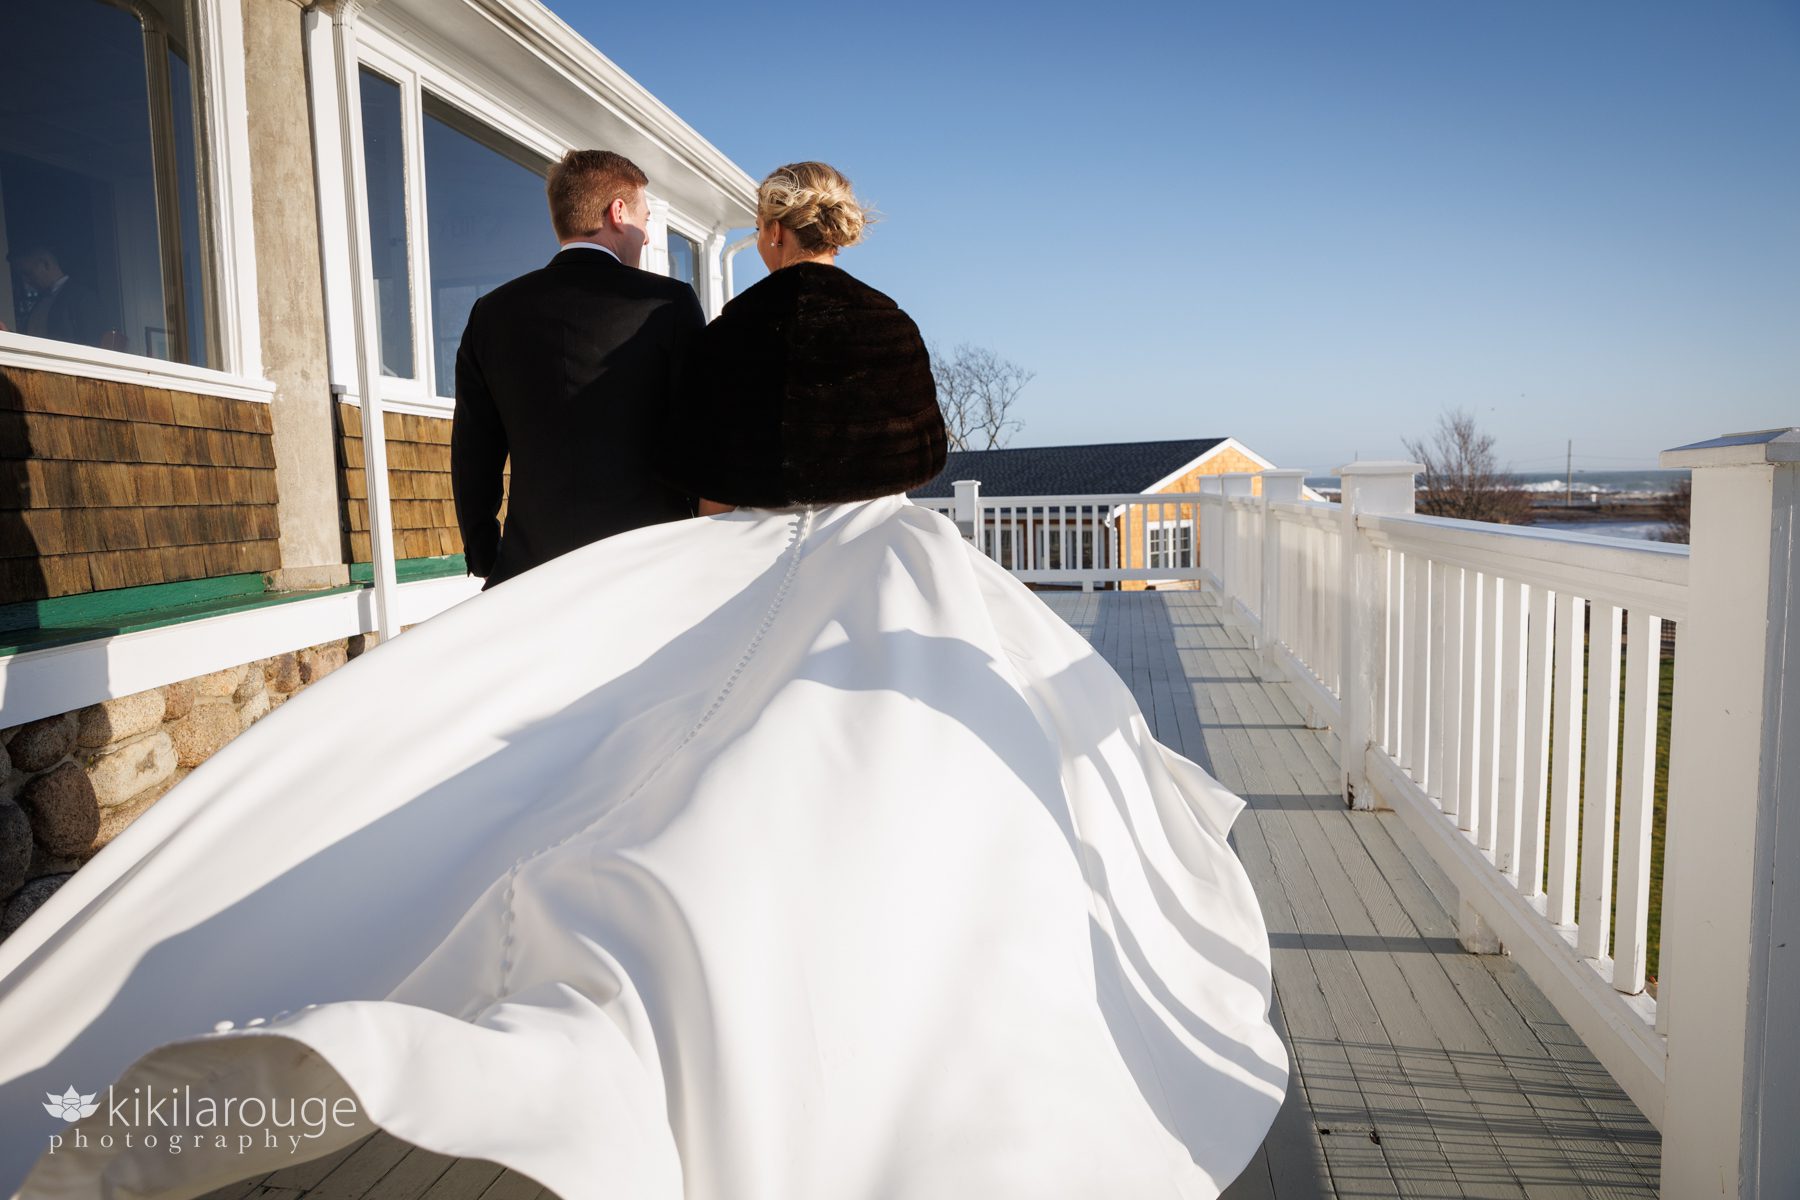 Wind blowing train of wedding dress up high as couple walks along a yacht club balcony